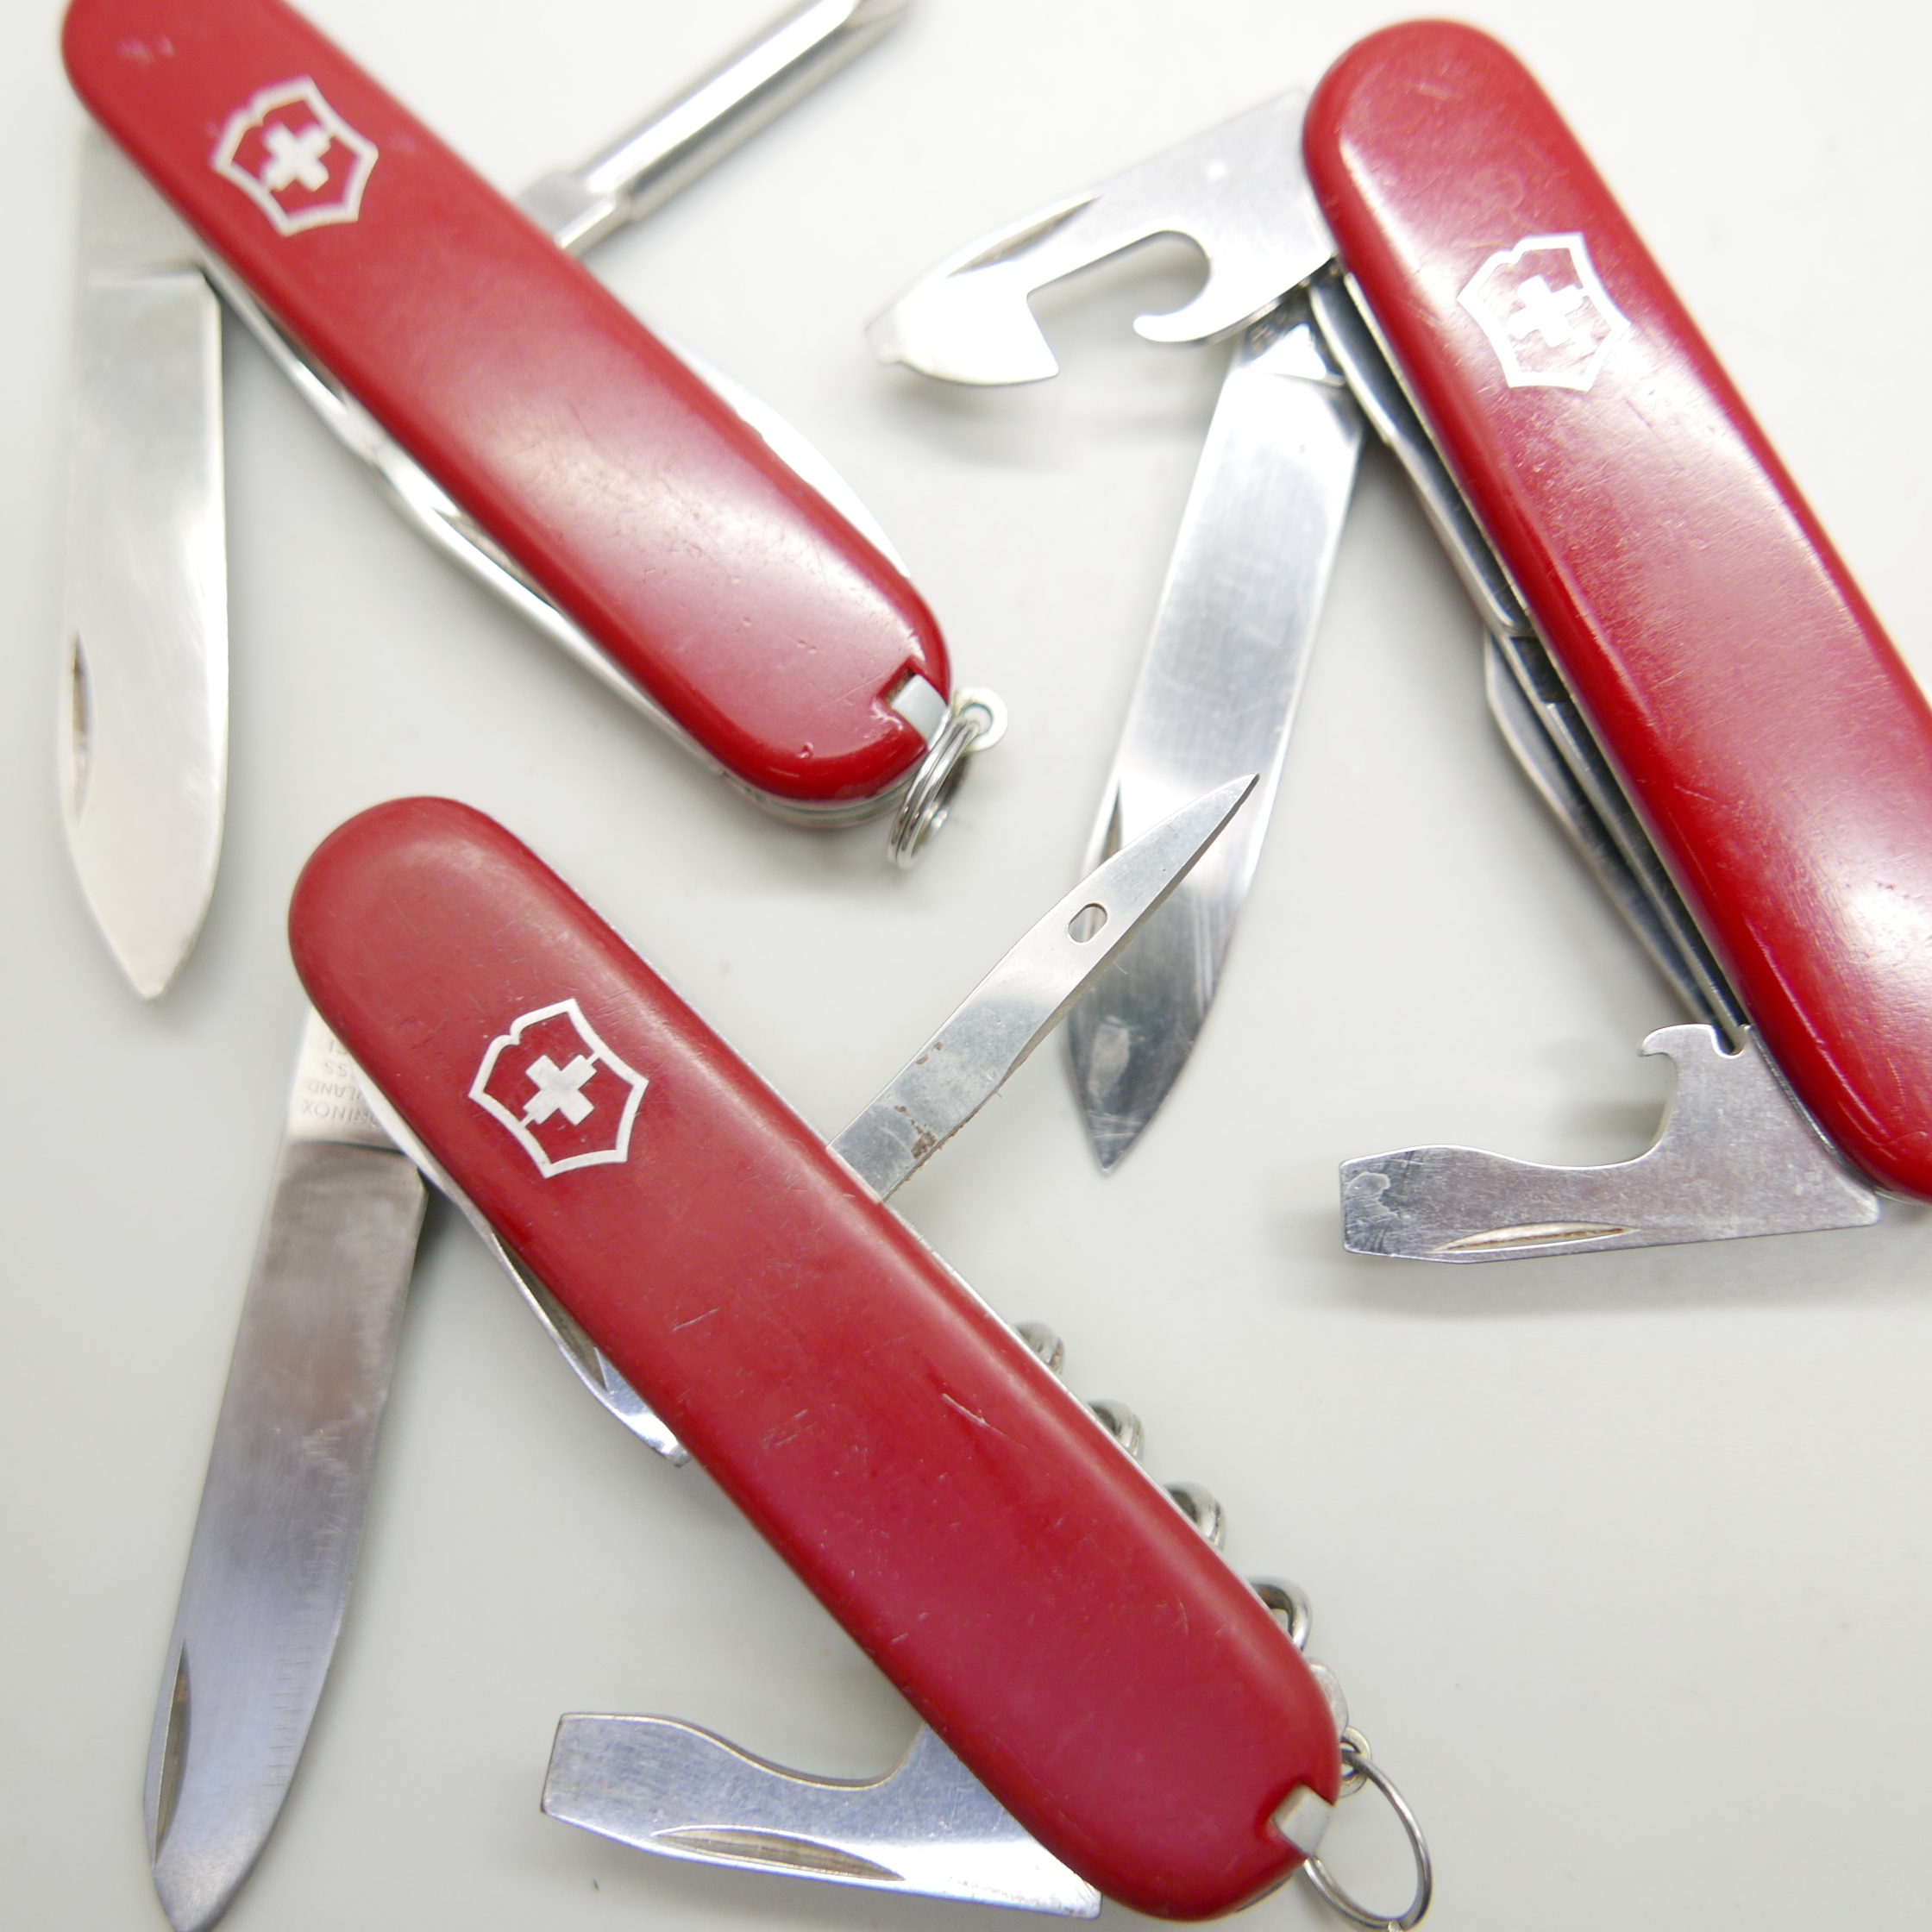 Three Victorinox Swiss multi-tool knives - Image 2 of 2